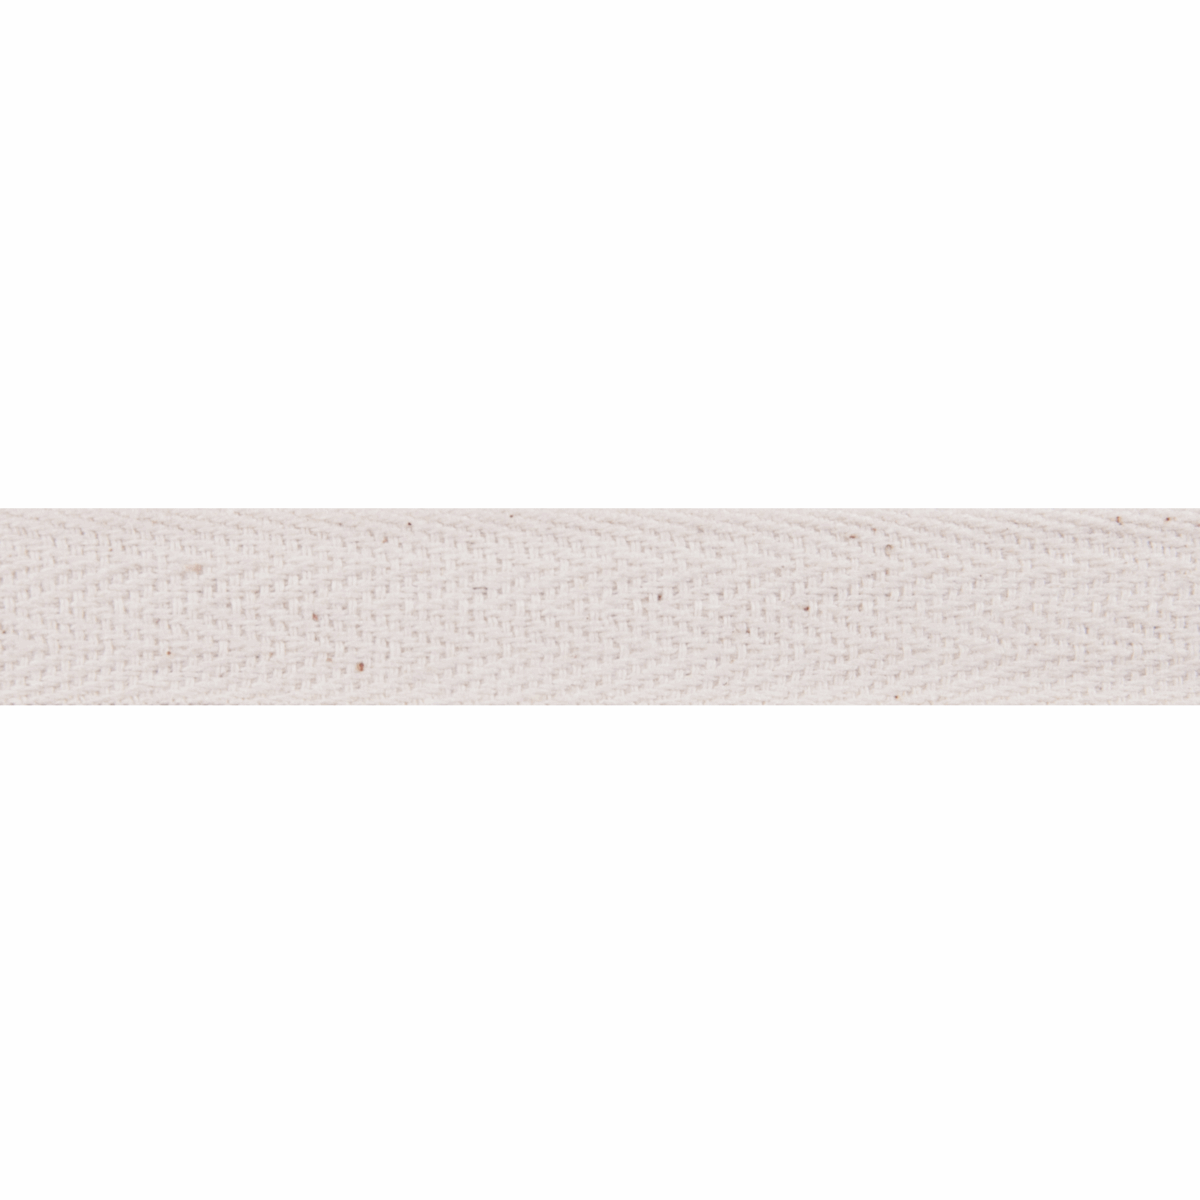 Herringbone Cotton Tape Natural 15mm Wide Price Per Metre